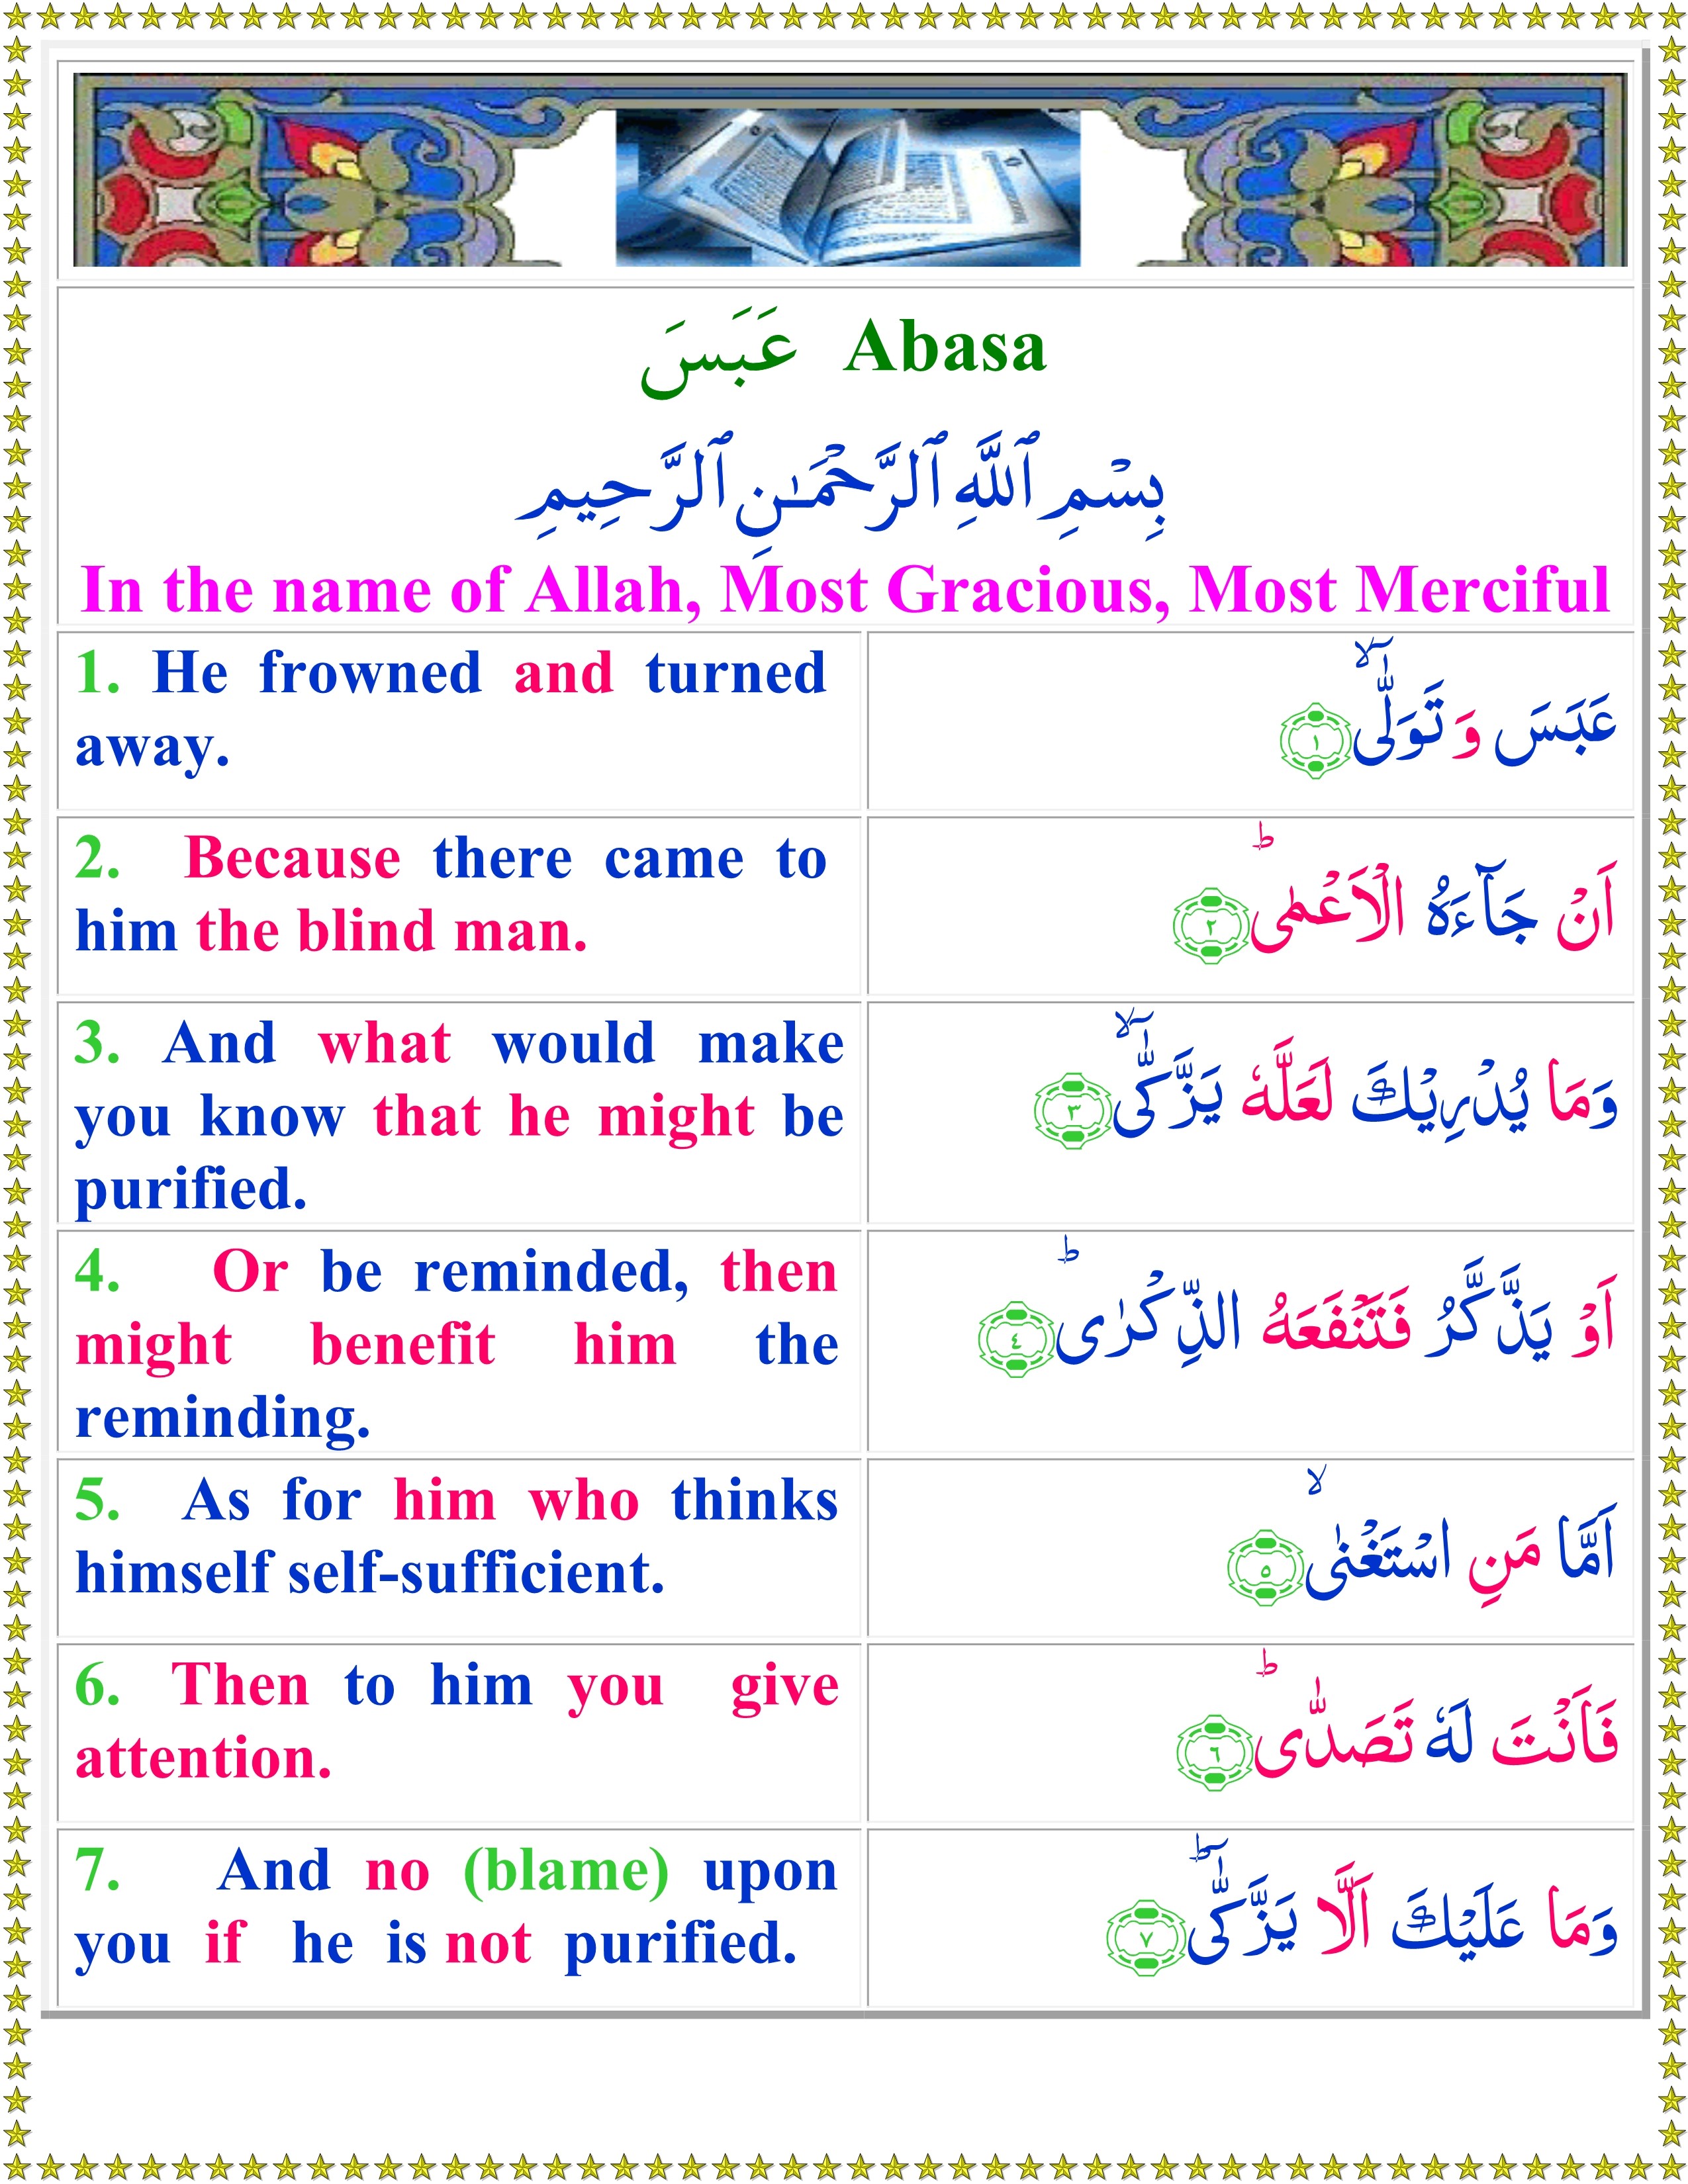 Read Surah Abasa With English Translation.